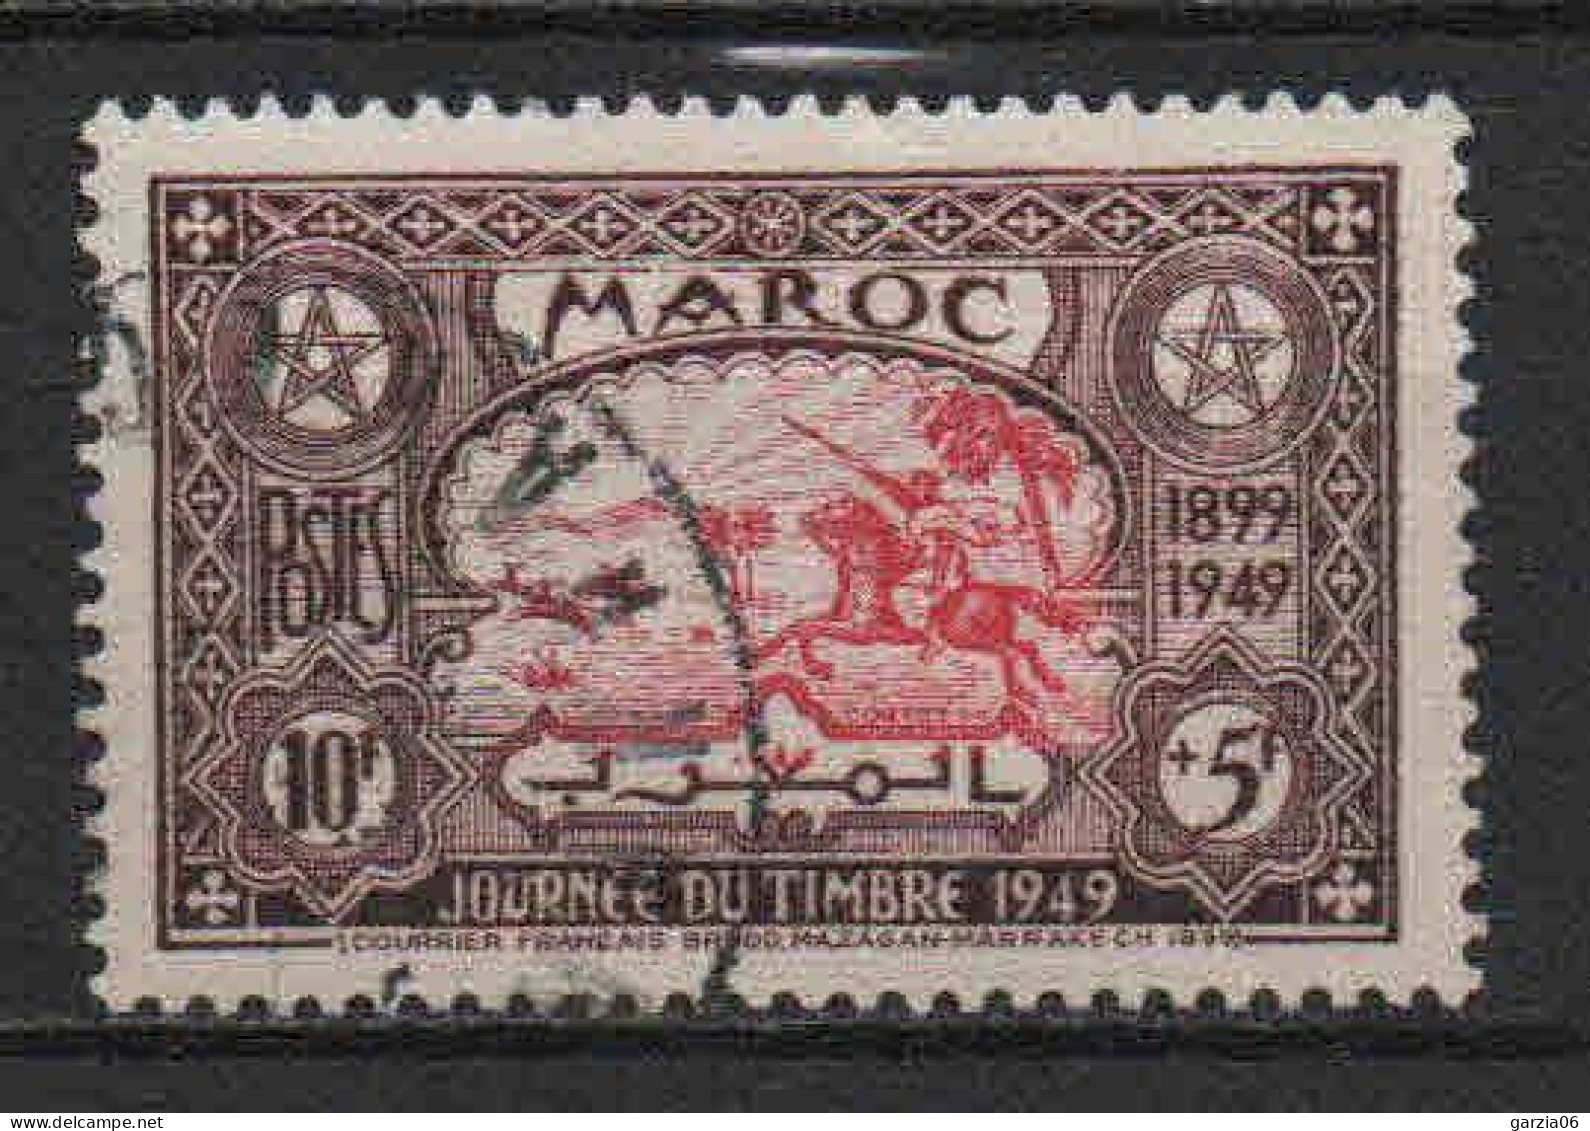 Maroc - 1949 - Journée Du Timbre -  N° 275 - Oblit - Used - Gebraucht